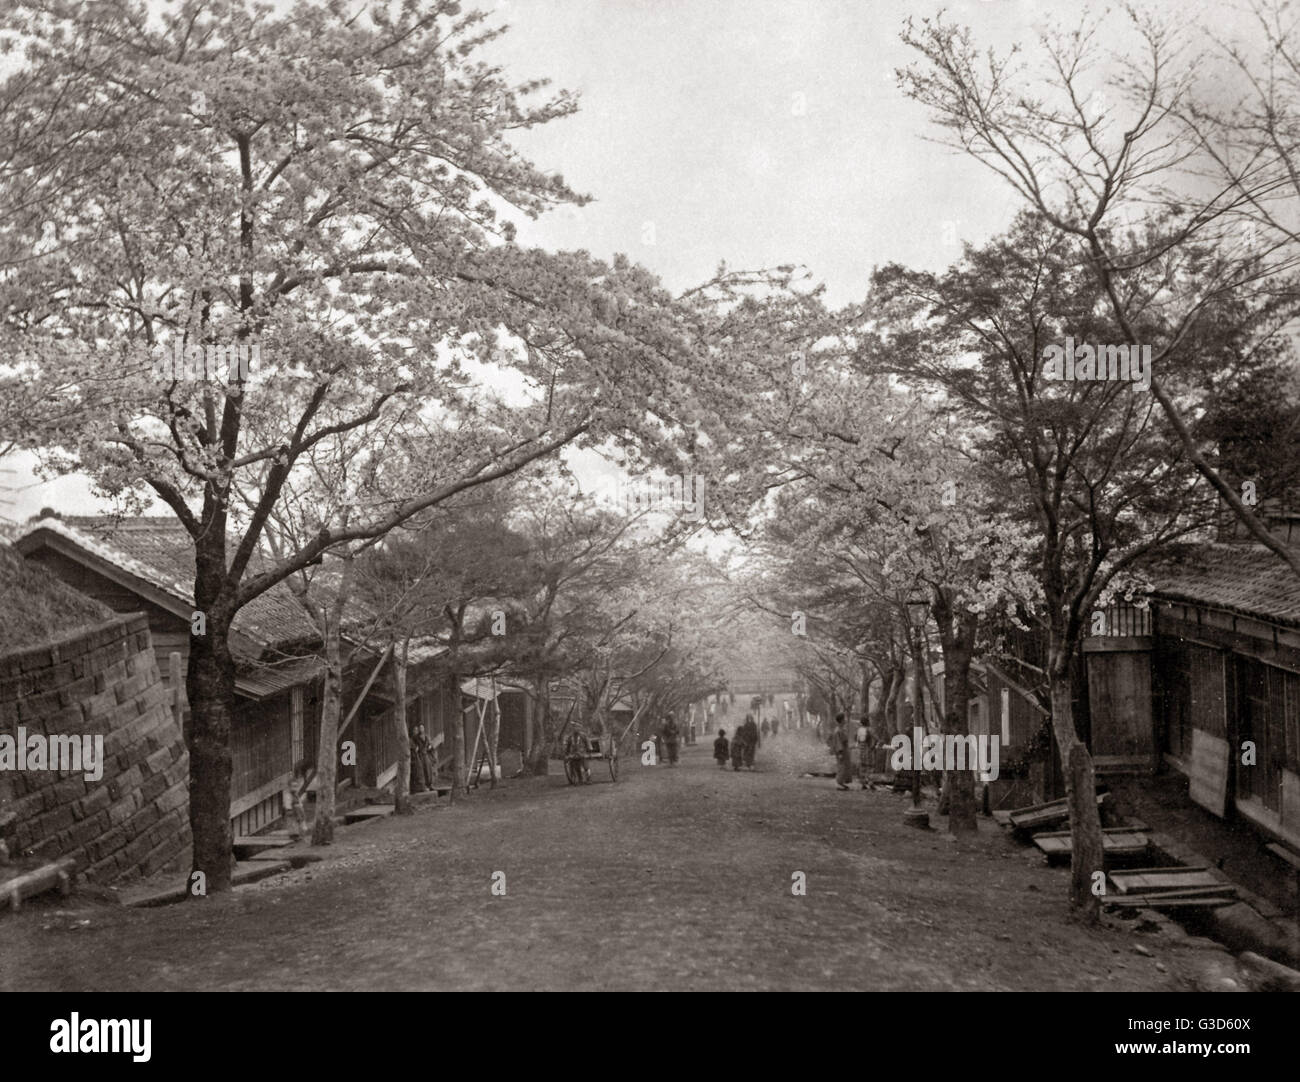 Cherry Blossom lining a sloping street, Japan, circa 1880s Stock Photo